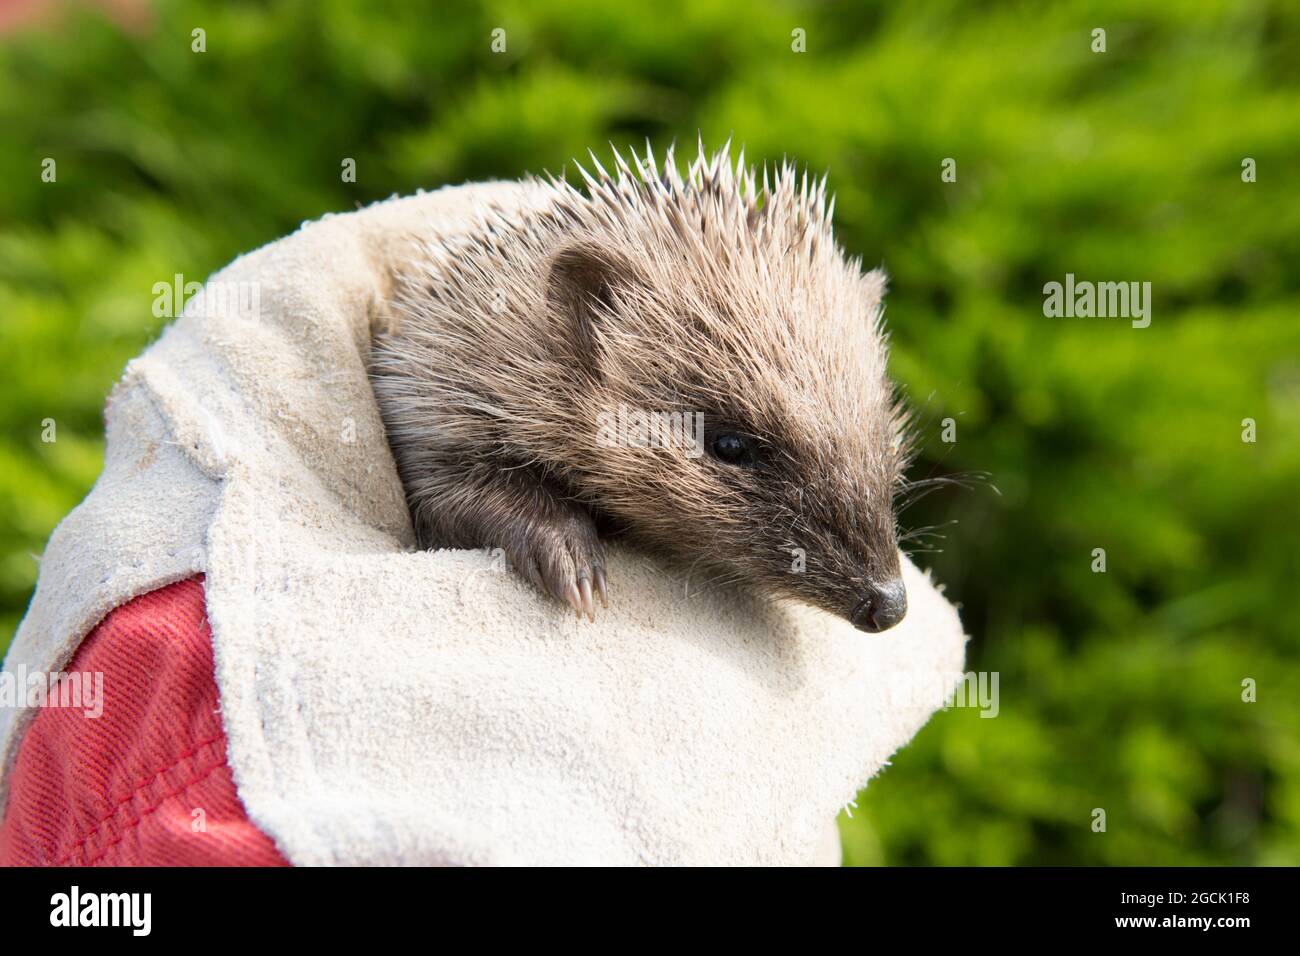 Hedgehog, Erinaceus europaeus, small, unwell, ill, not growing, underweight, held in helpers gloved hand, Sussex, UK, July Stock Photo